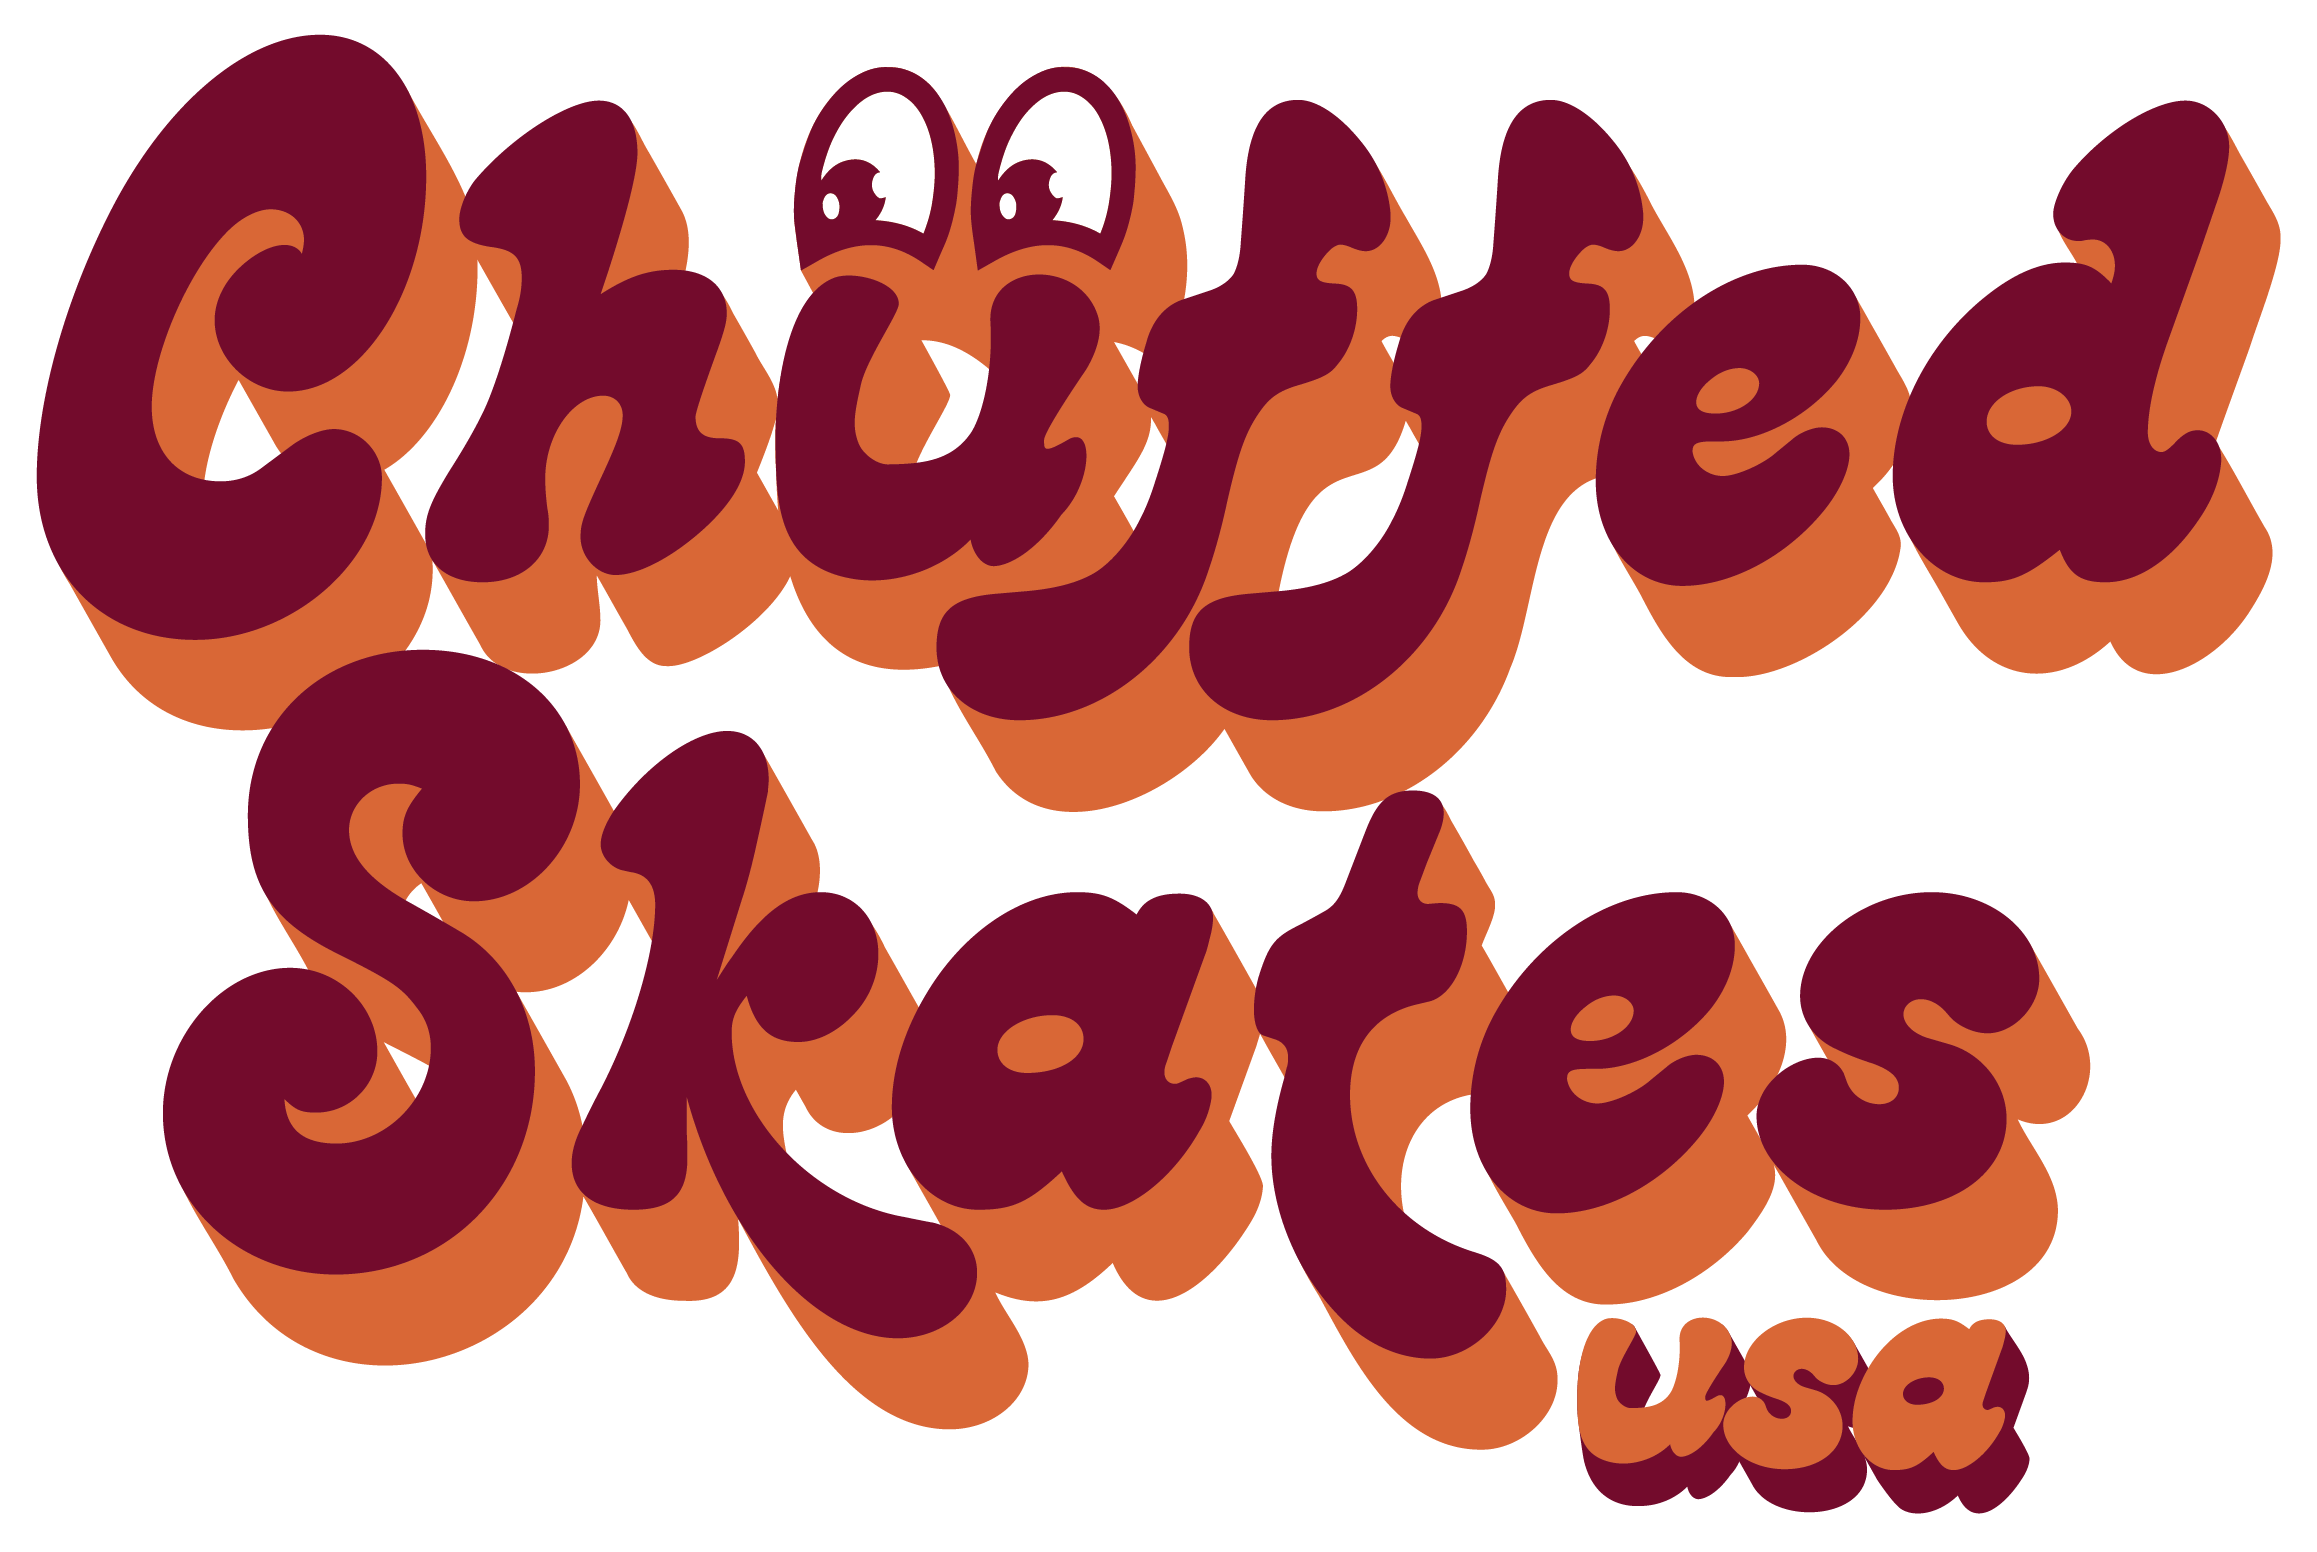 Chuffed Skates USA